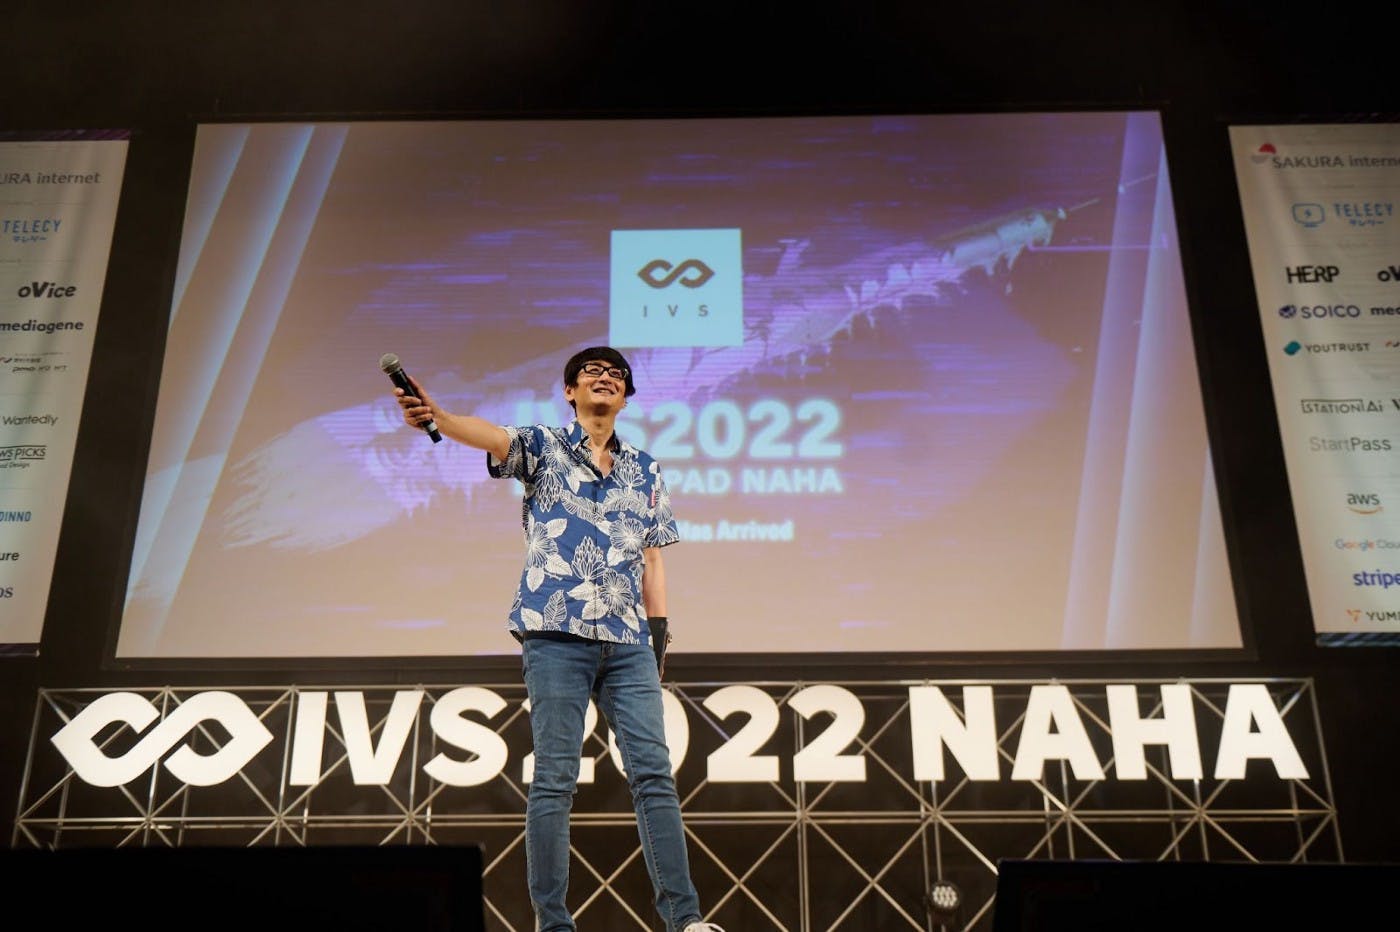 Headline Partner Akio Tanaka hosts IVS2022 LAUNCHPAD NAHA